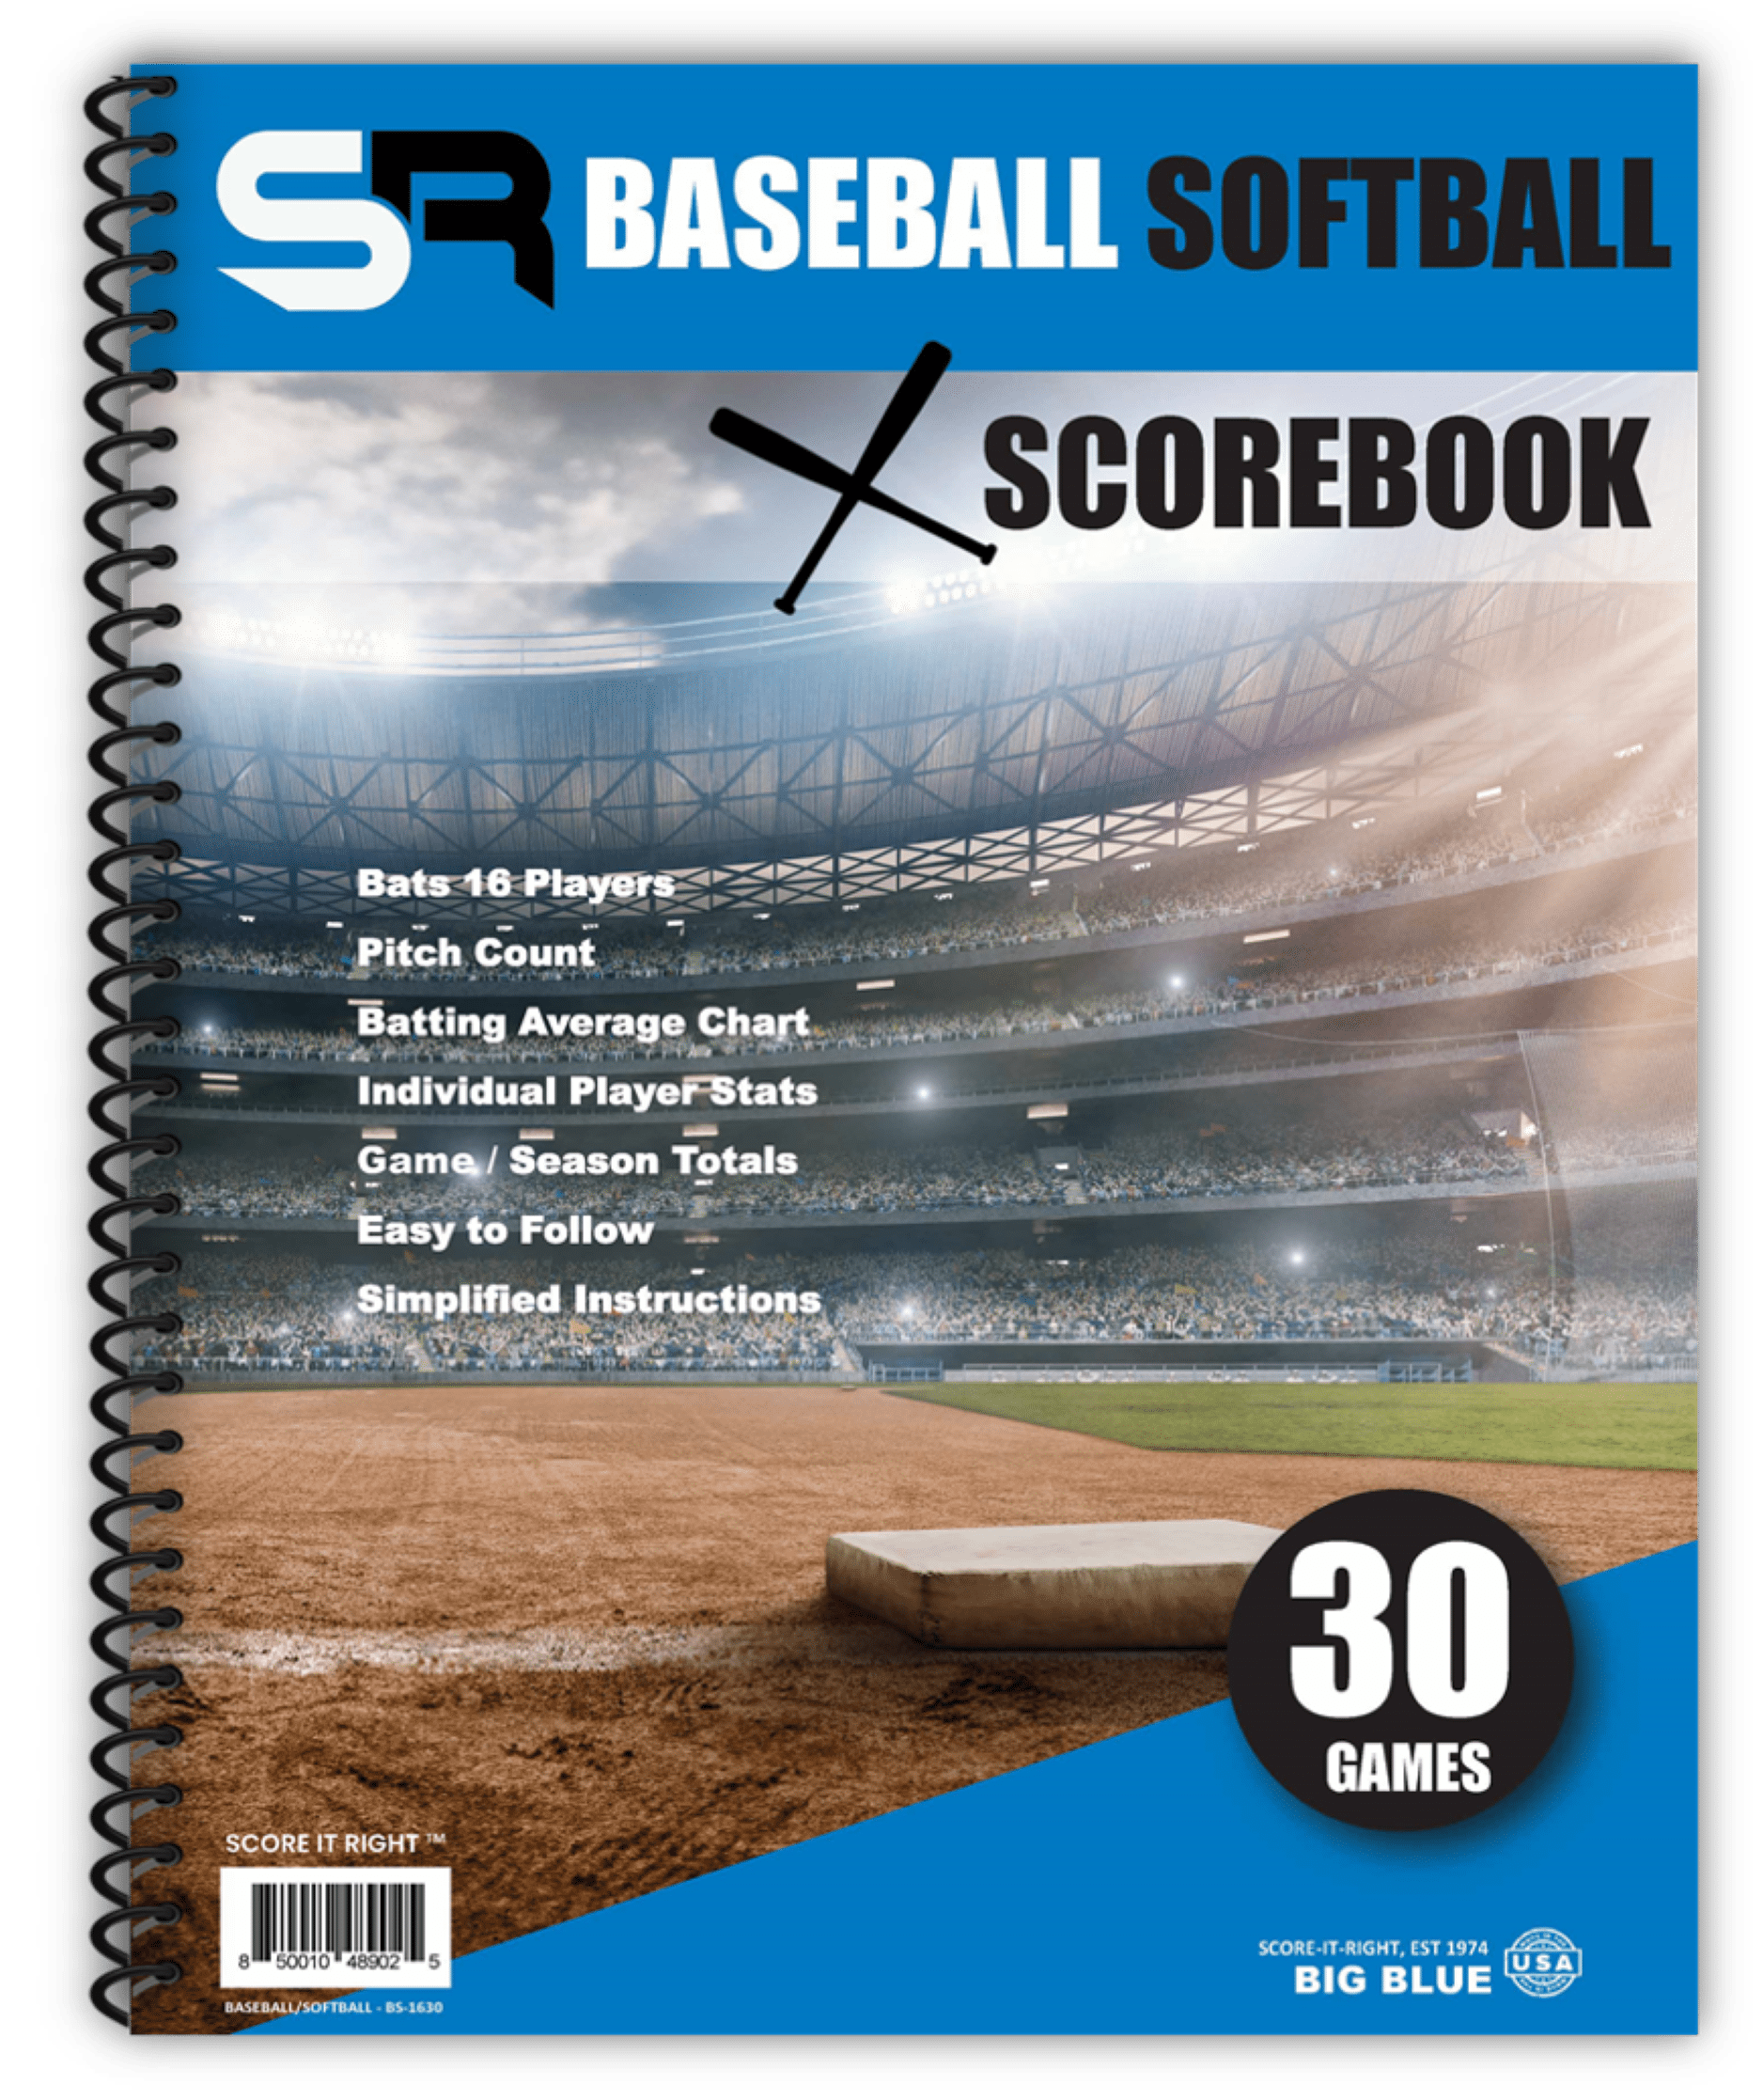 Score It Right Big Blue Baseball/Softball Scorebook – Premium Score Keeping Book